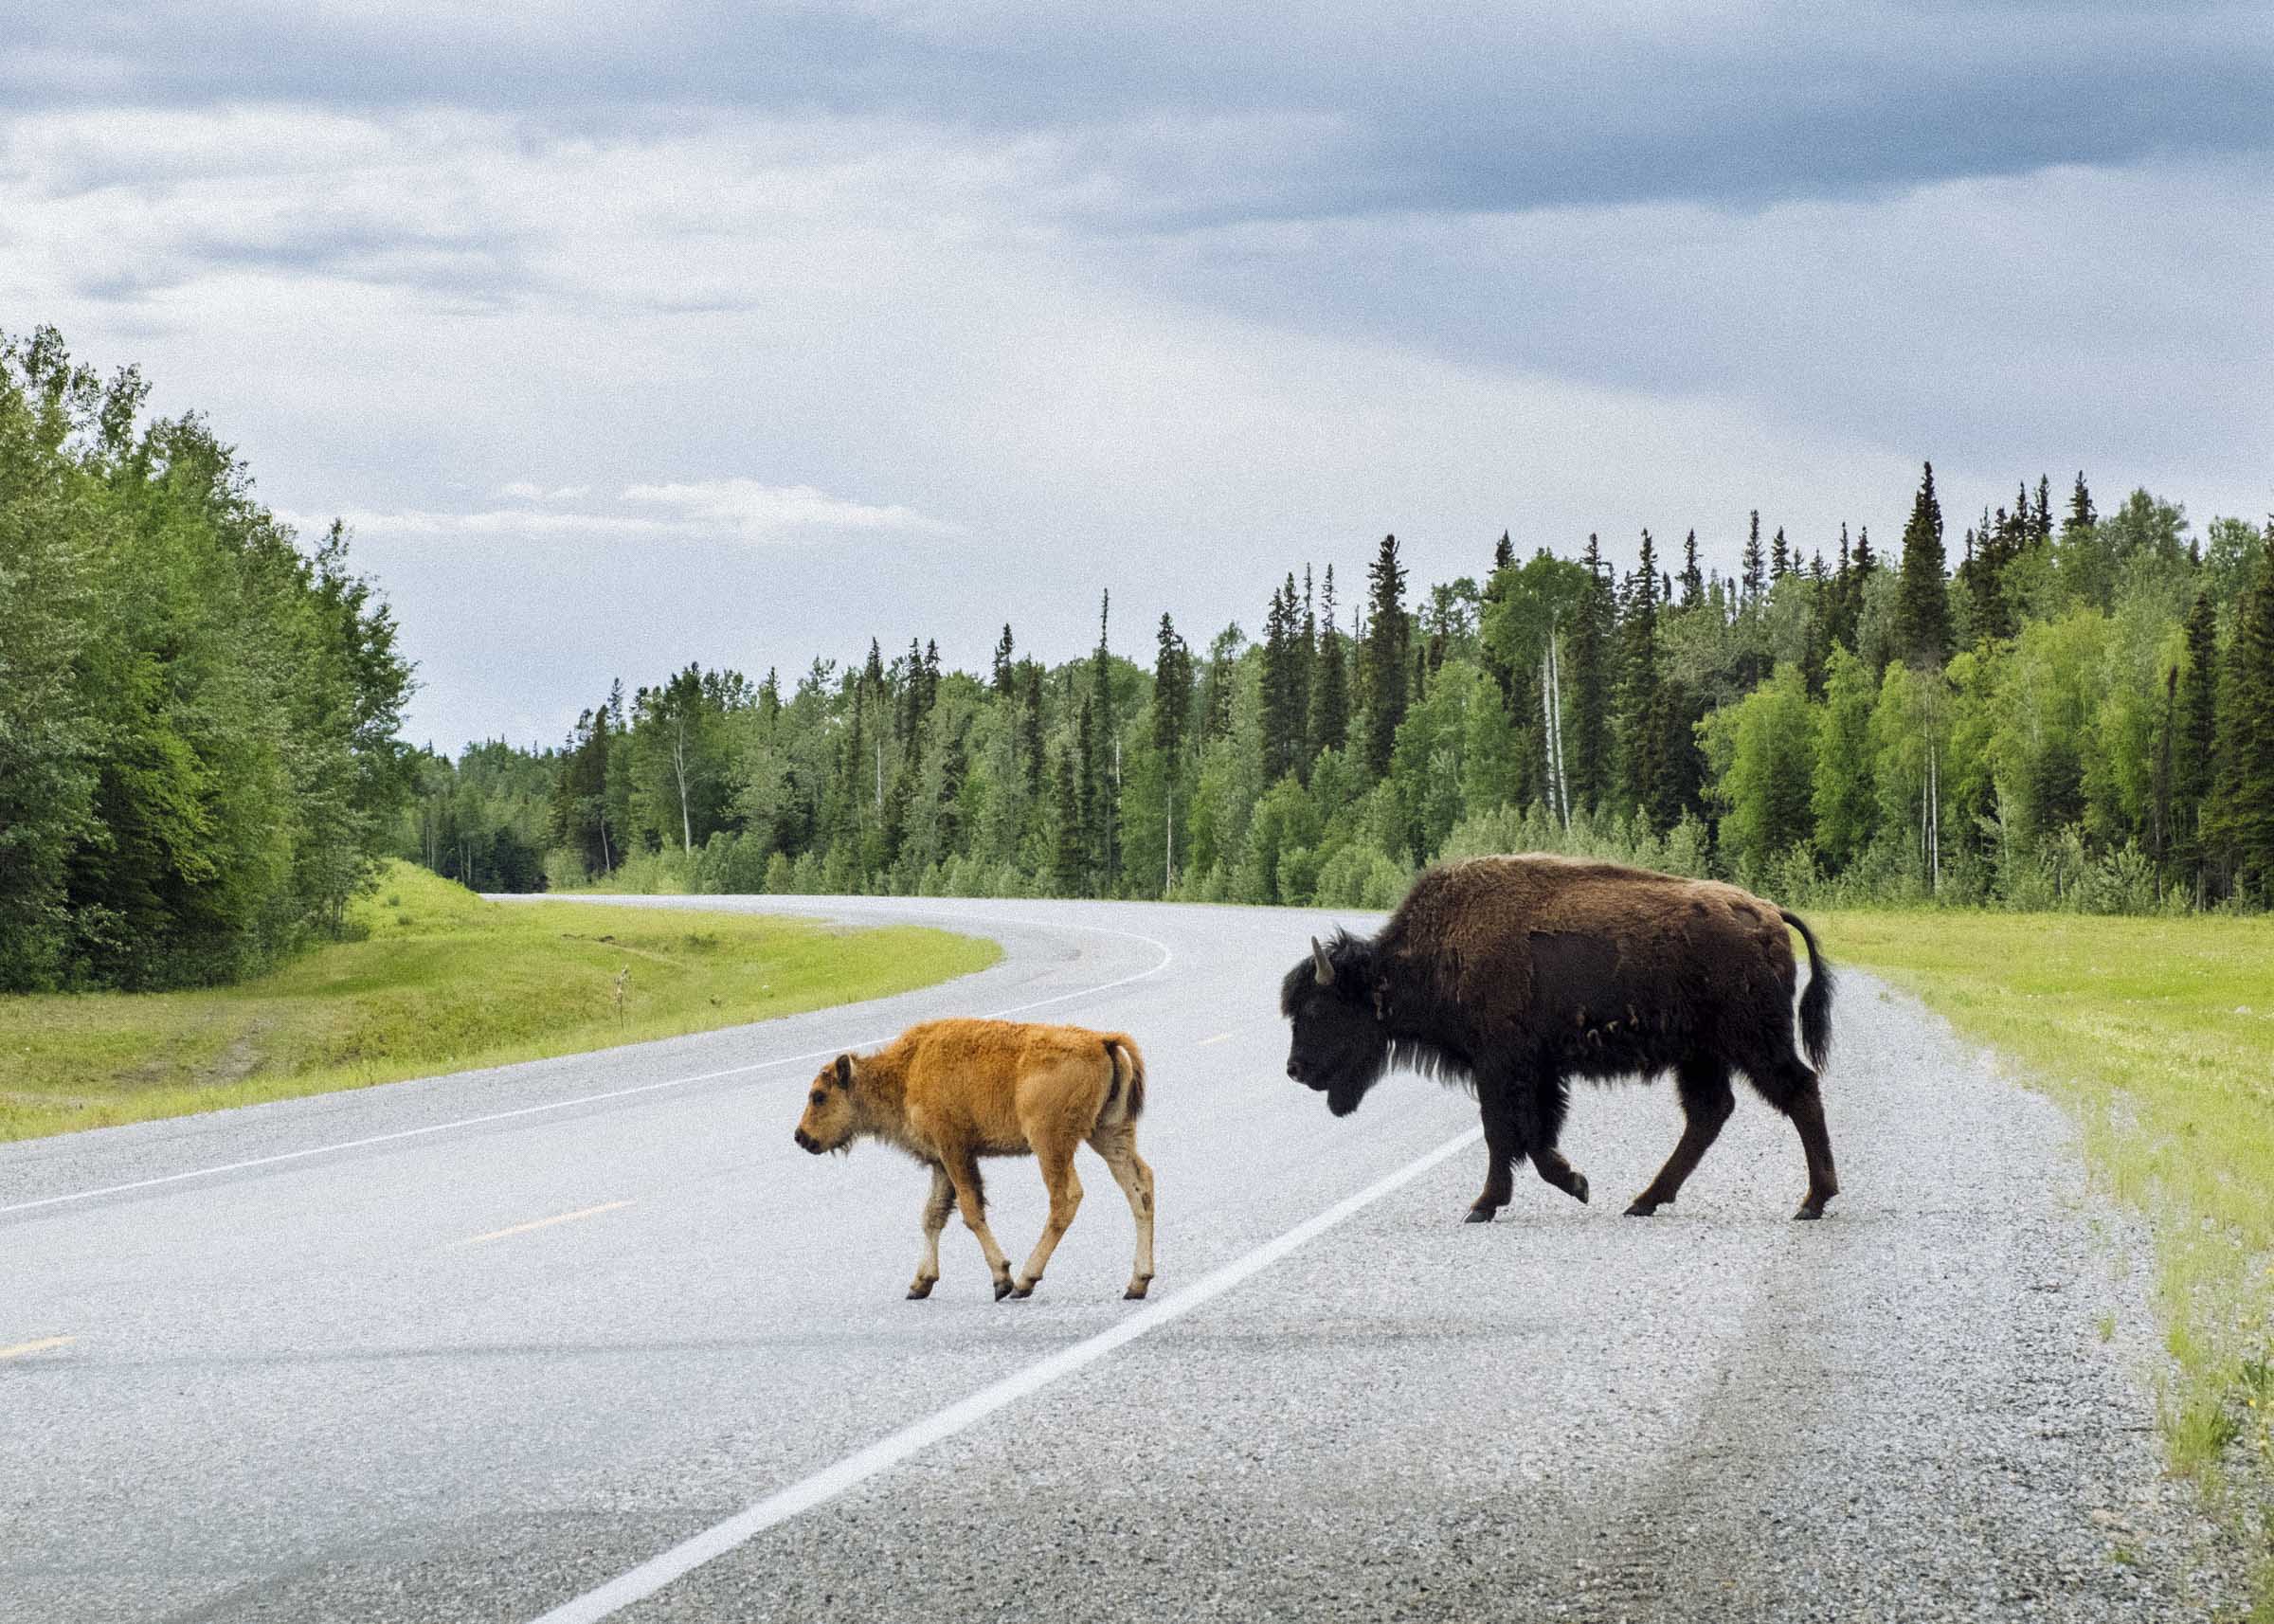 Buffalo crossing the road near Liard, BC